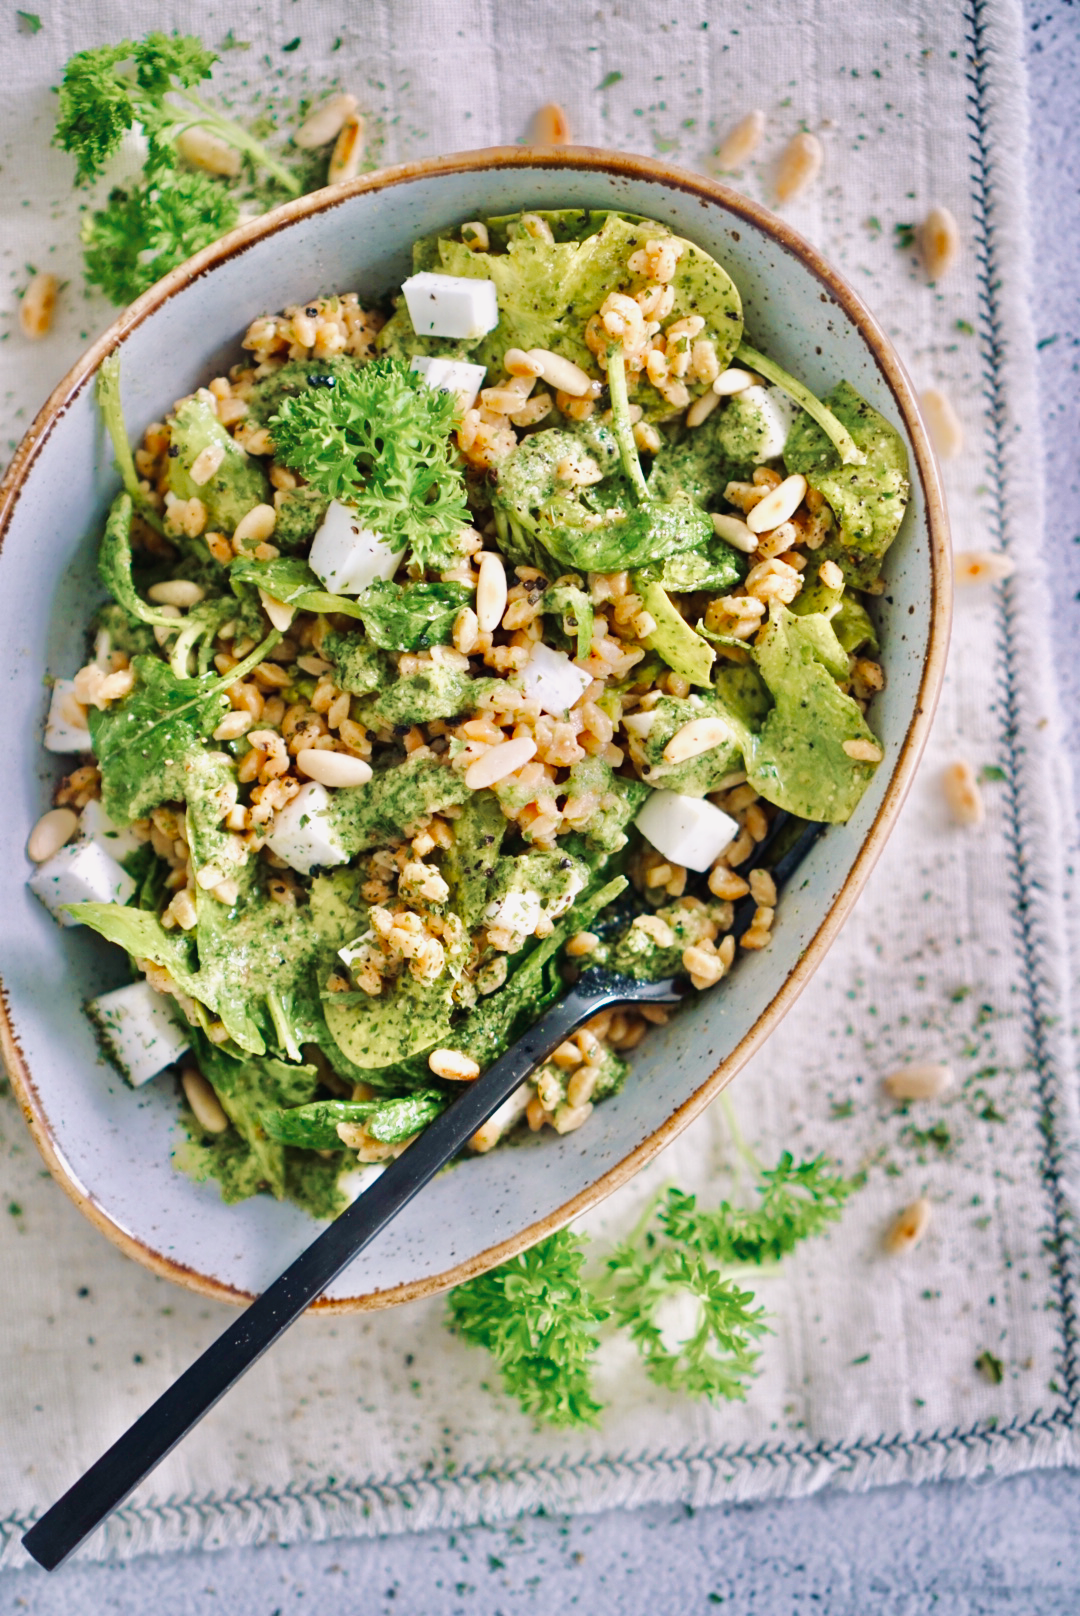 Rice salad with parsley pesto